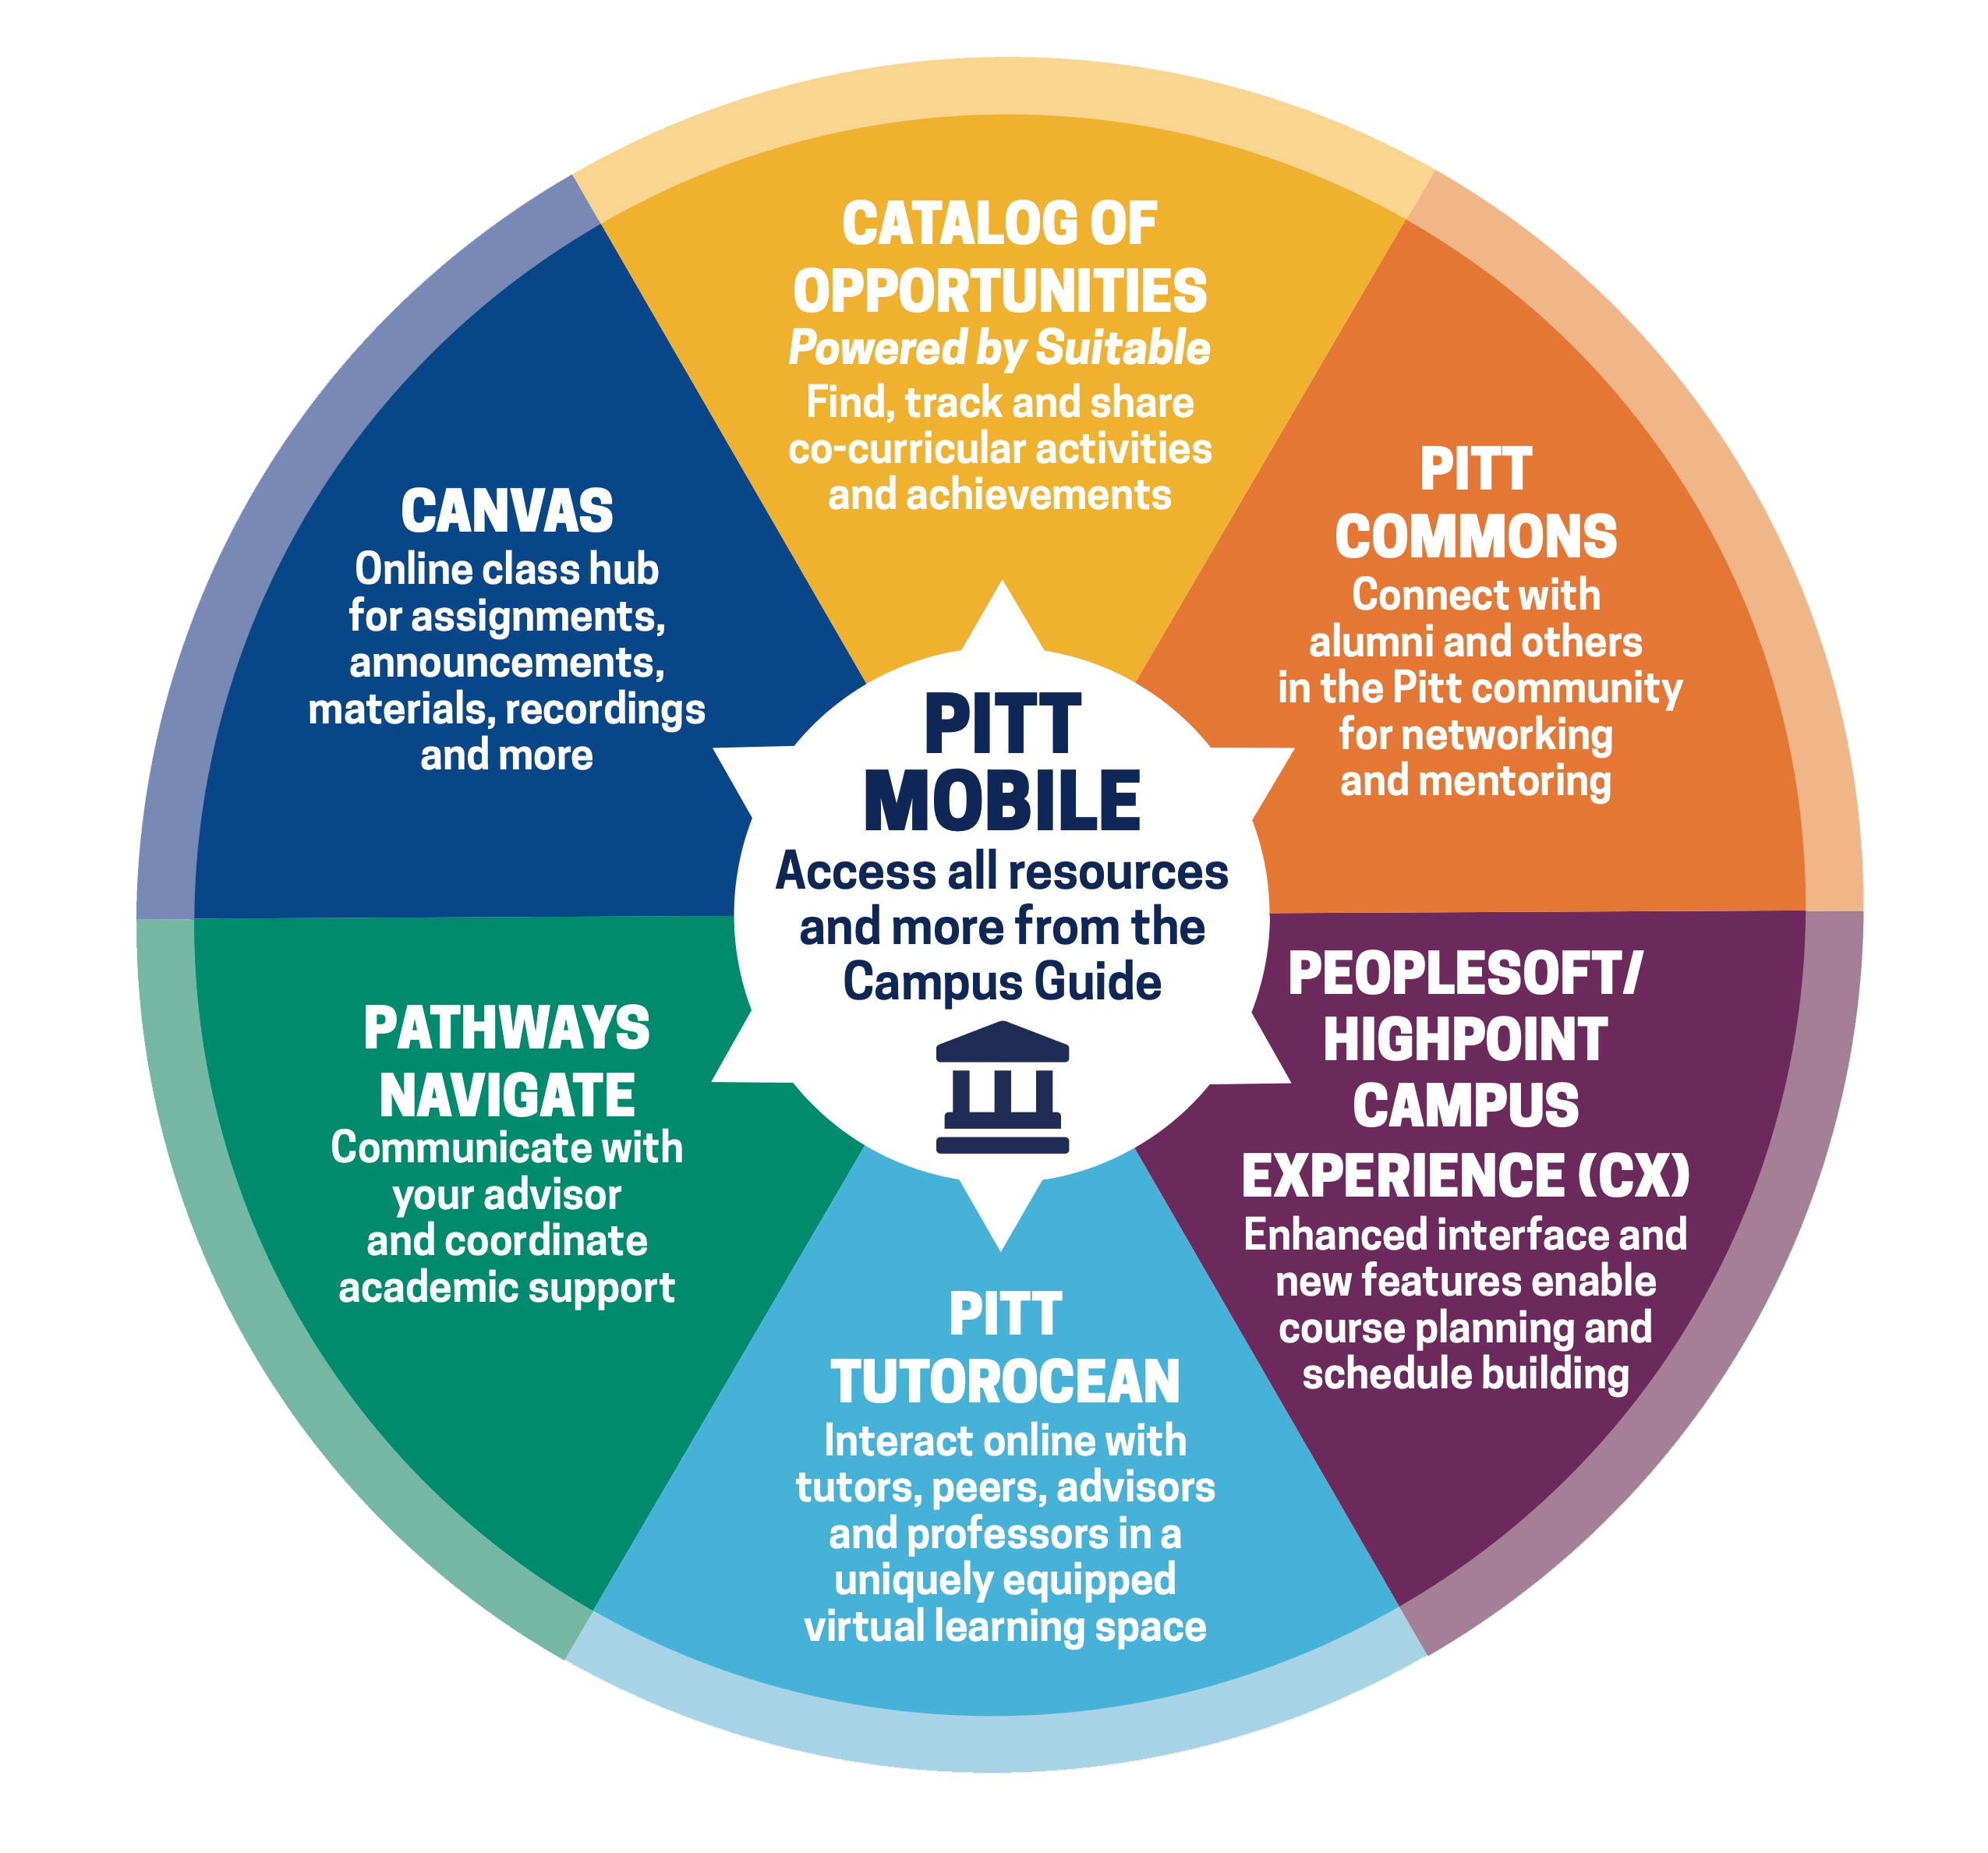 Canvas, Catalog of Opportunities, Pitt Commons, PeopleSoft/HighPoint Campus Experience (CX), Pitt TutorOcean, Pathways Navigate